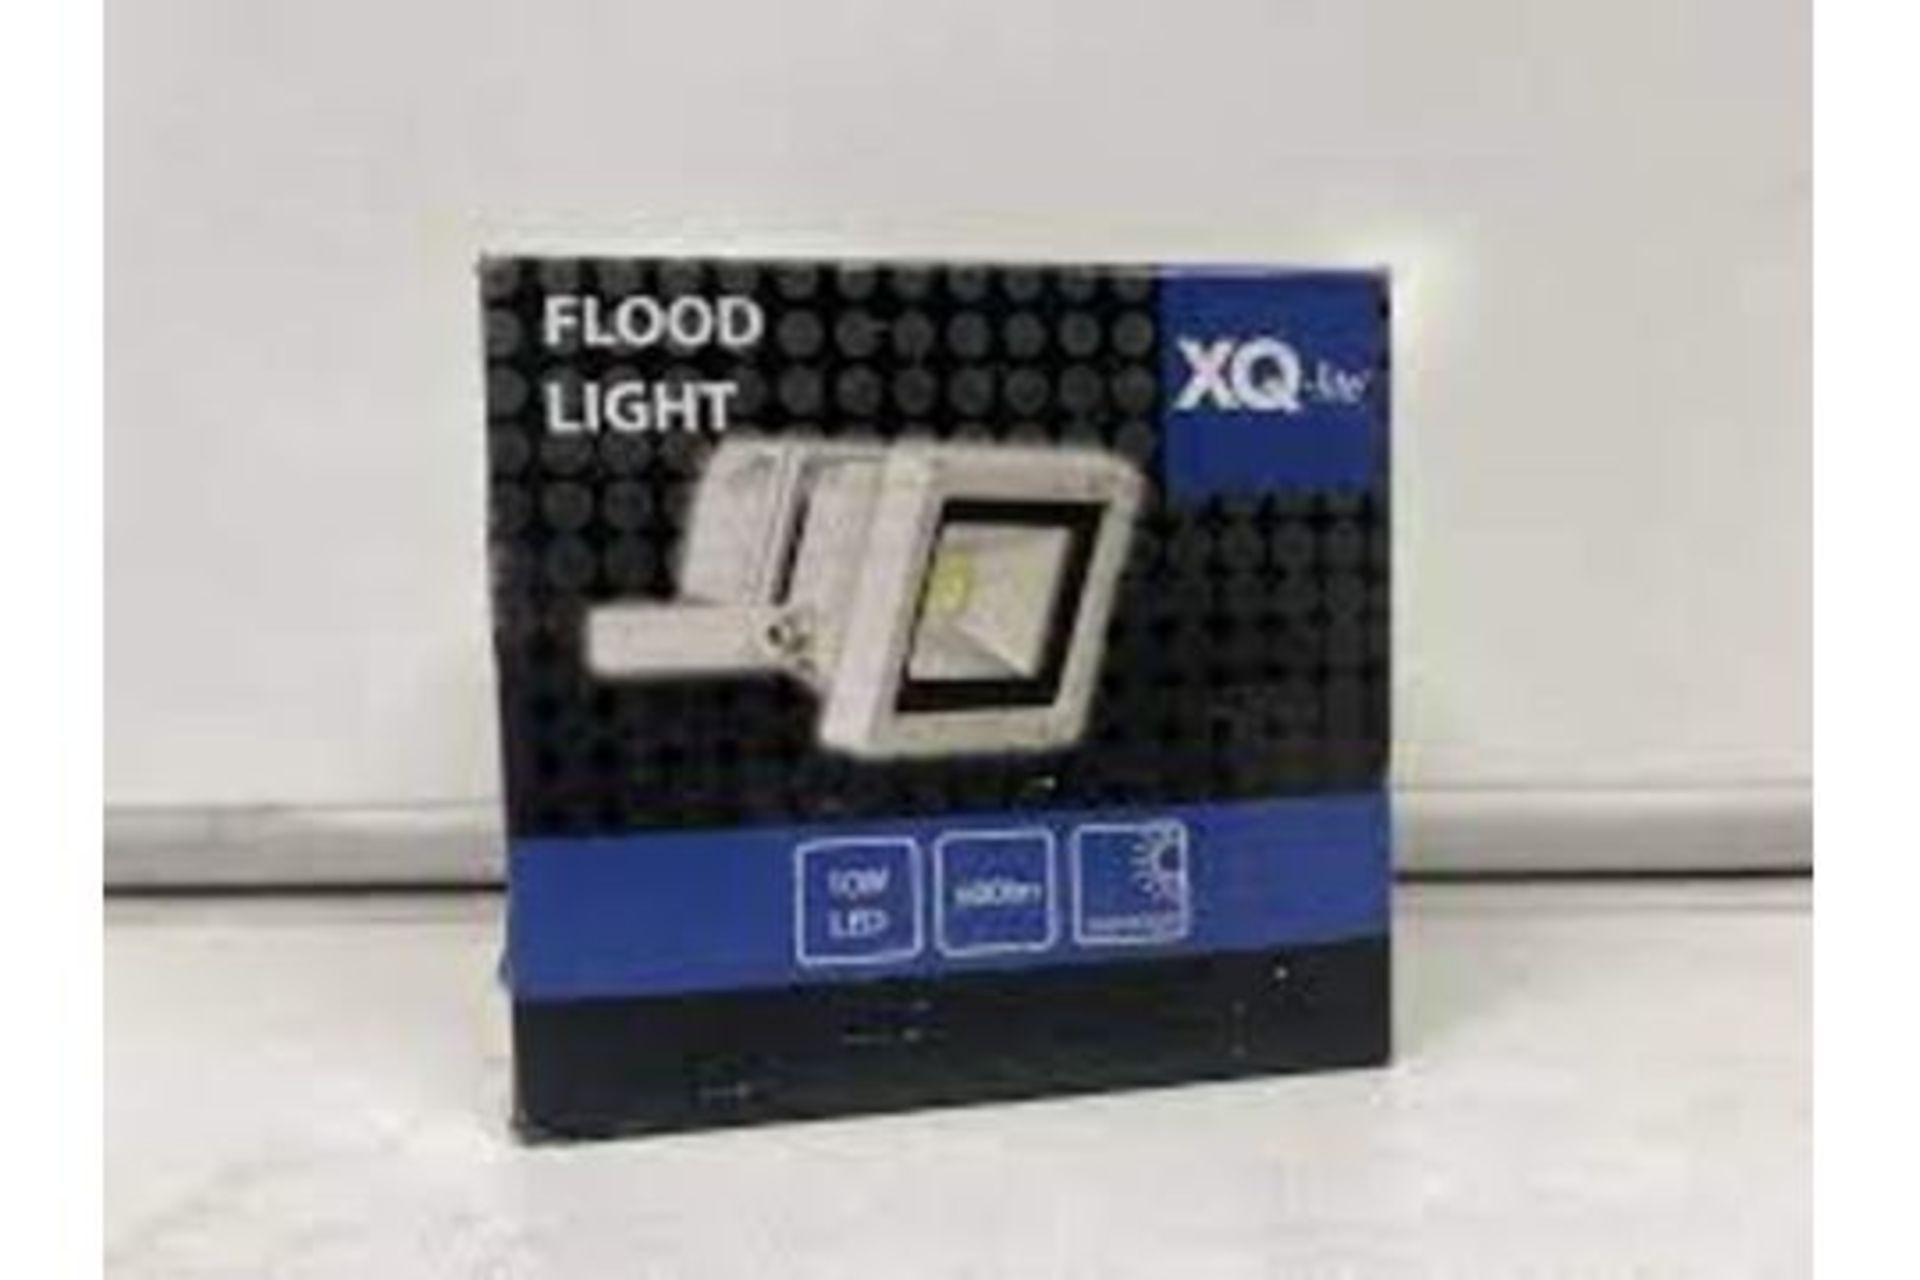 10 X XQ-LITE MAINS POWERED COOL WHITE LED FLOODLIGHTS RRP £21 EACH R3.4